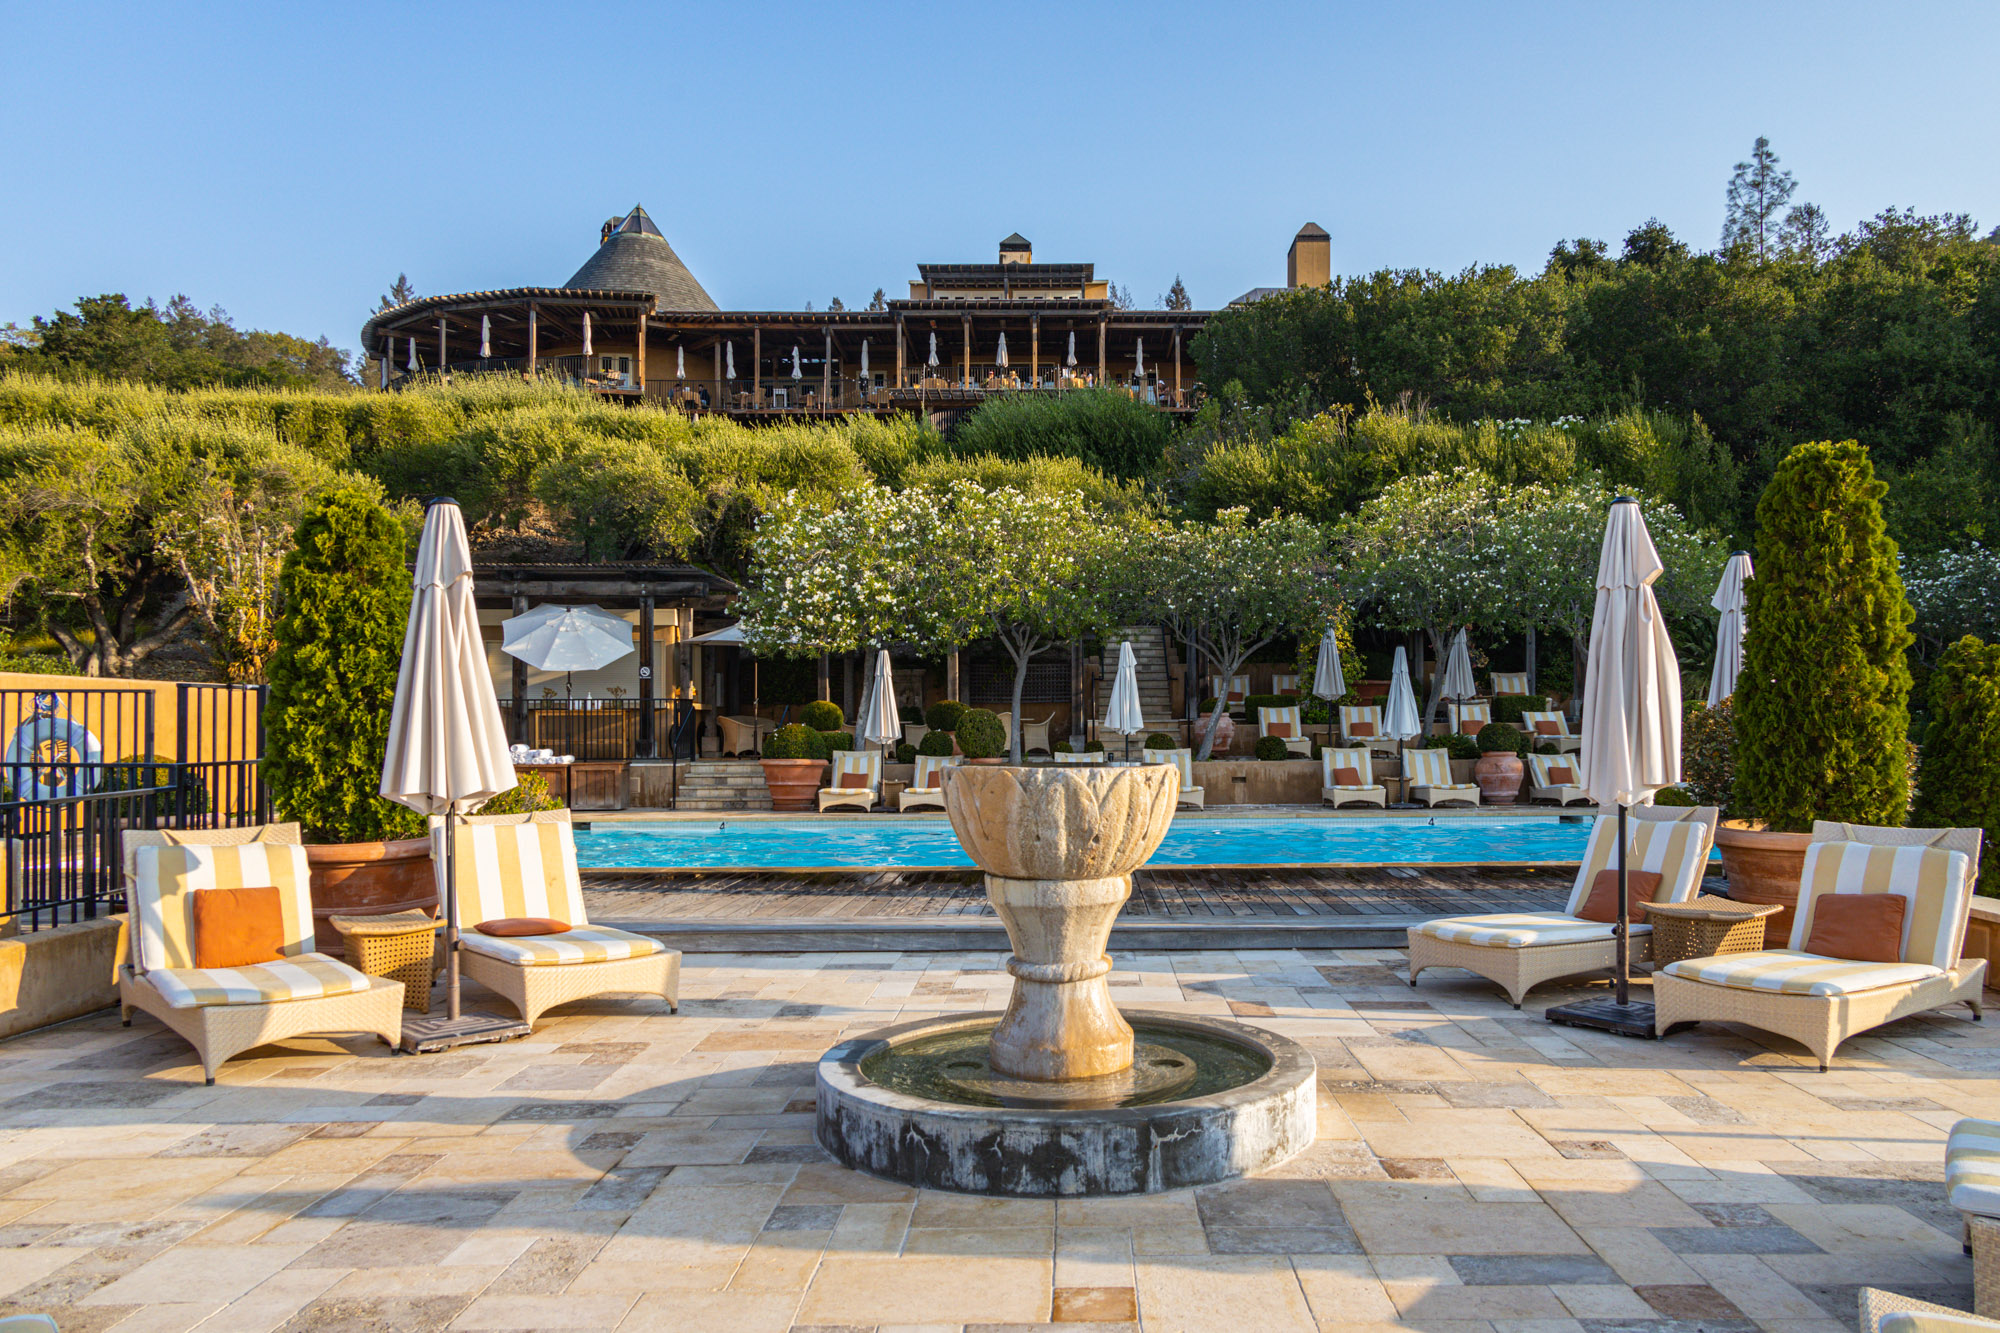 The Best Luxury Hotel in Napa California – The Auberge du Soleil